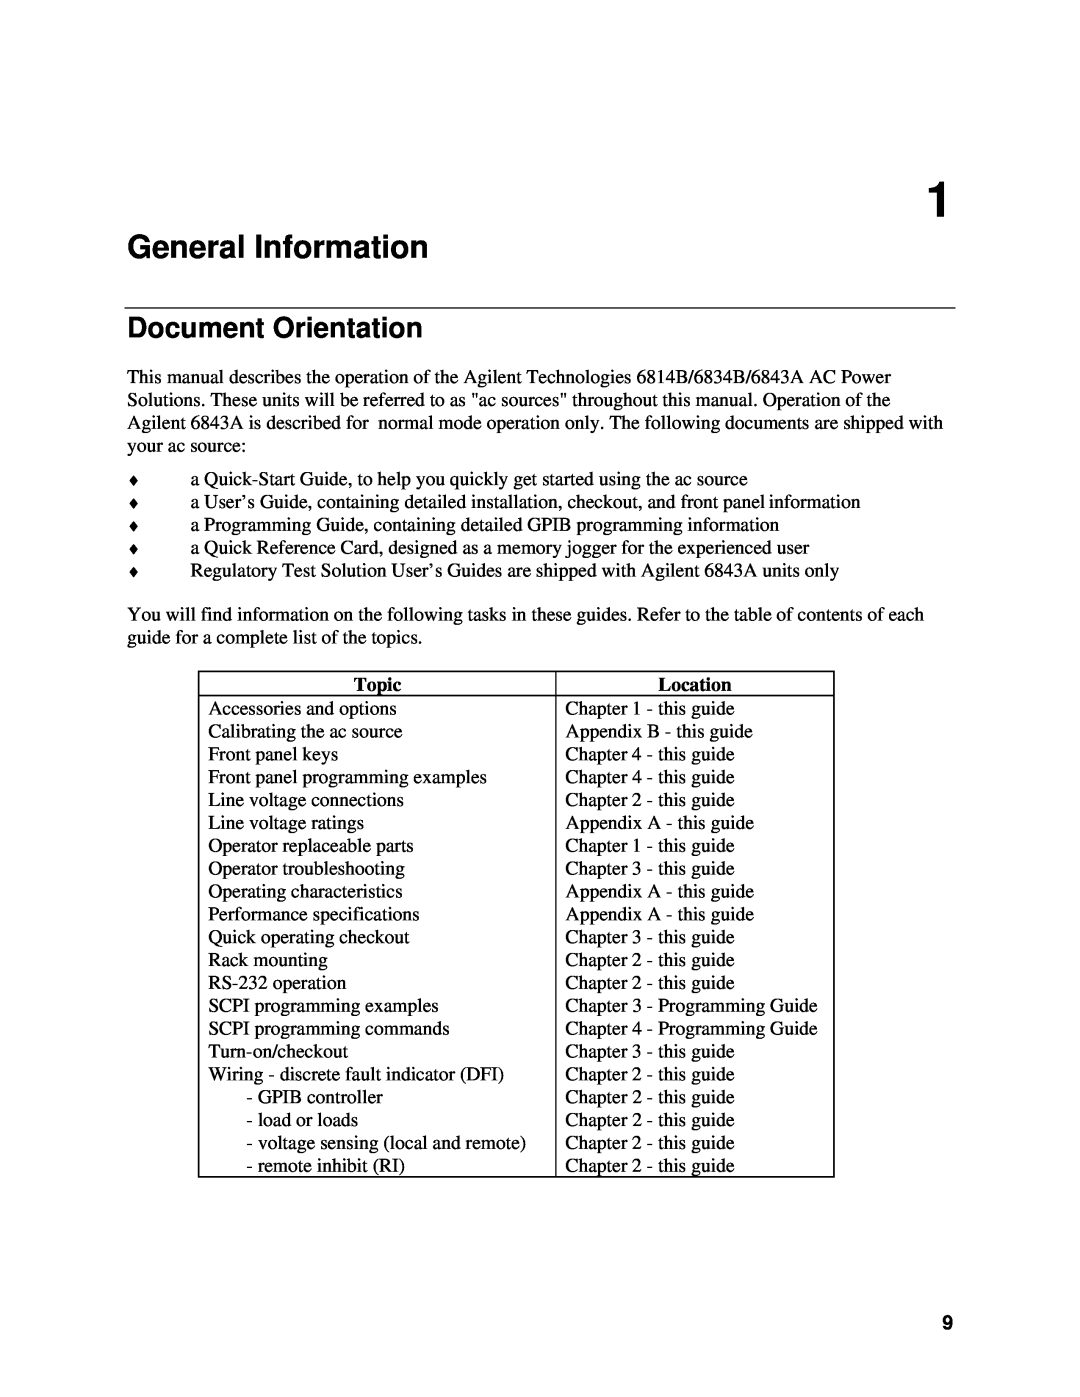 Agilent Technologies 6834B, 6814B, 6843A manual General Information, Document Orientation, Topic, Location 